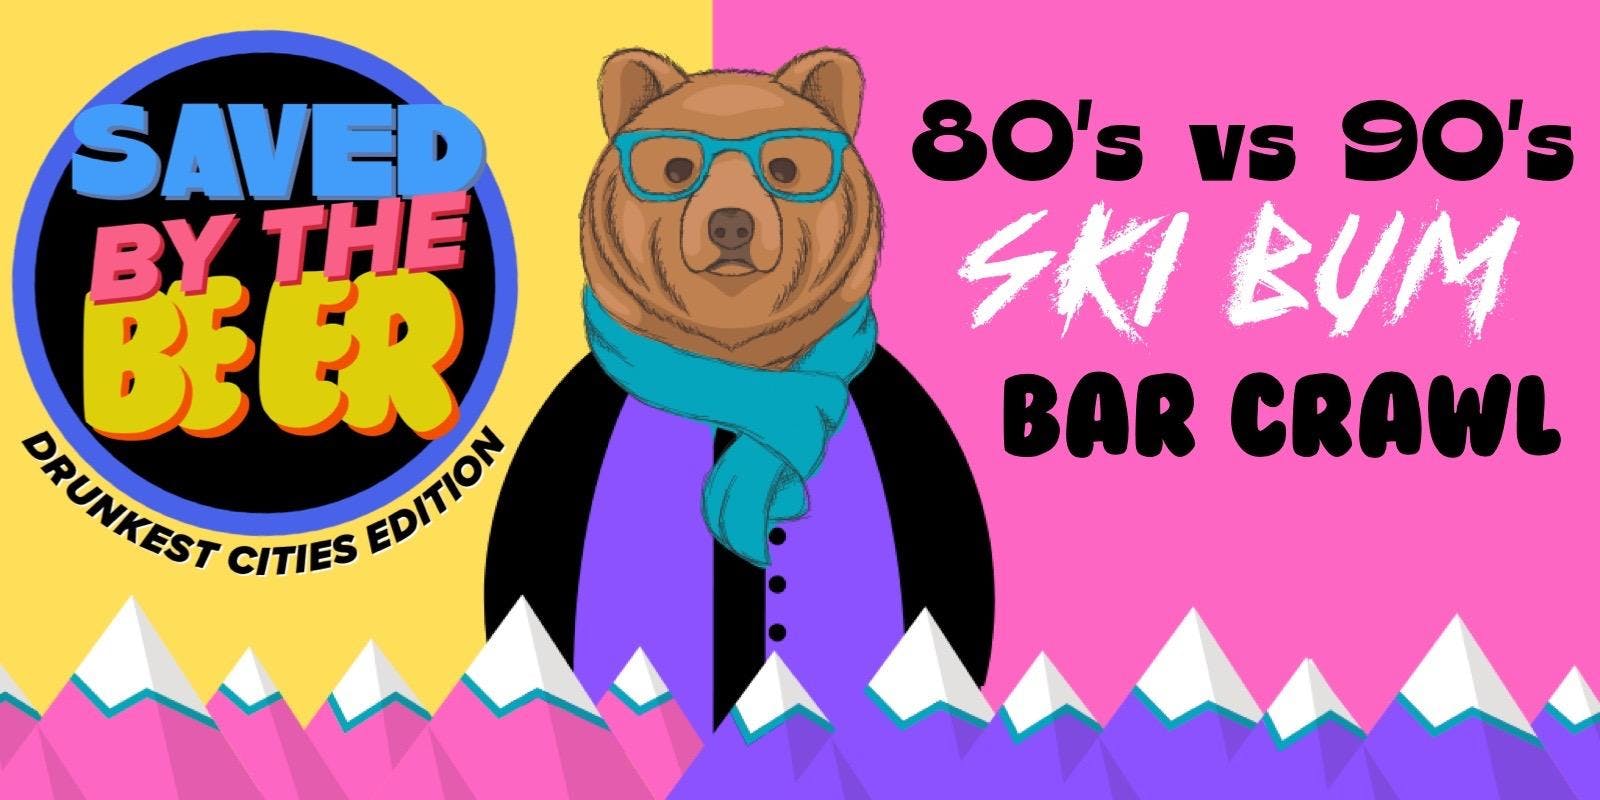 Saved By The Beer 80s Vs 90s Ski Bum Bar Crawl - Fargo